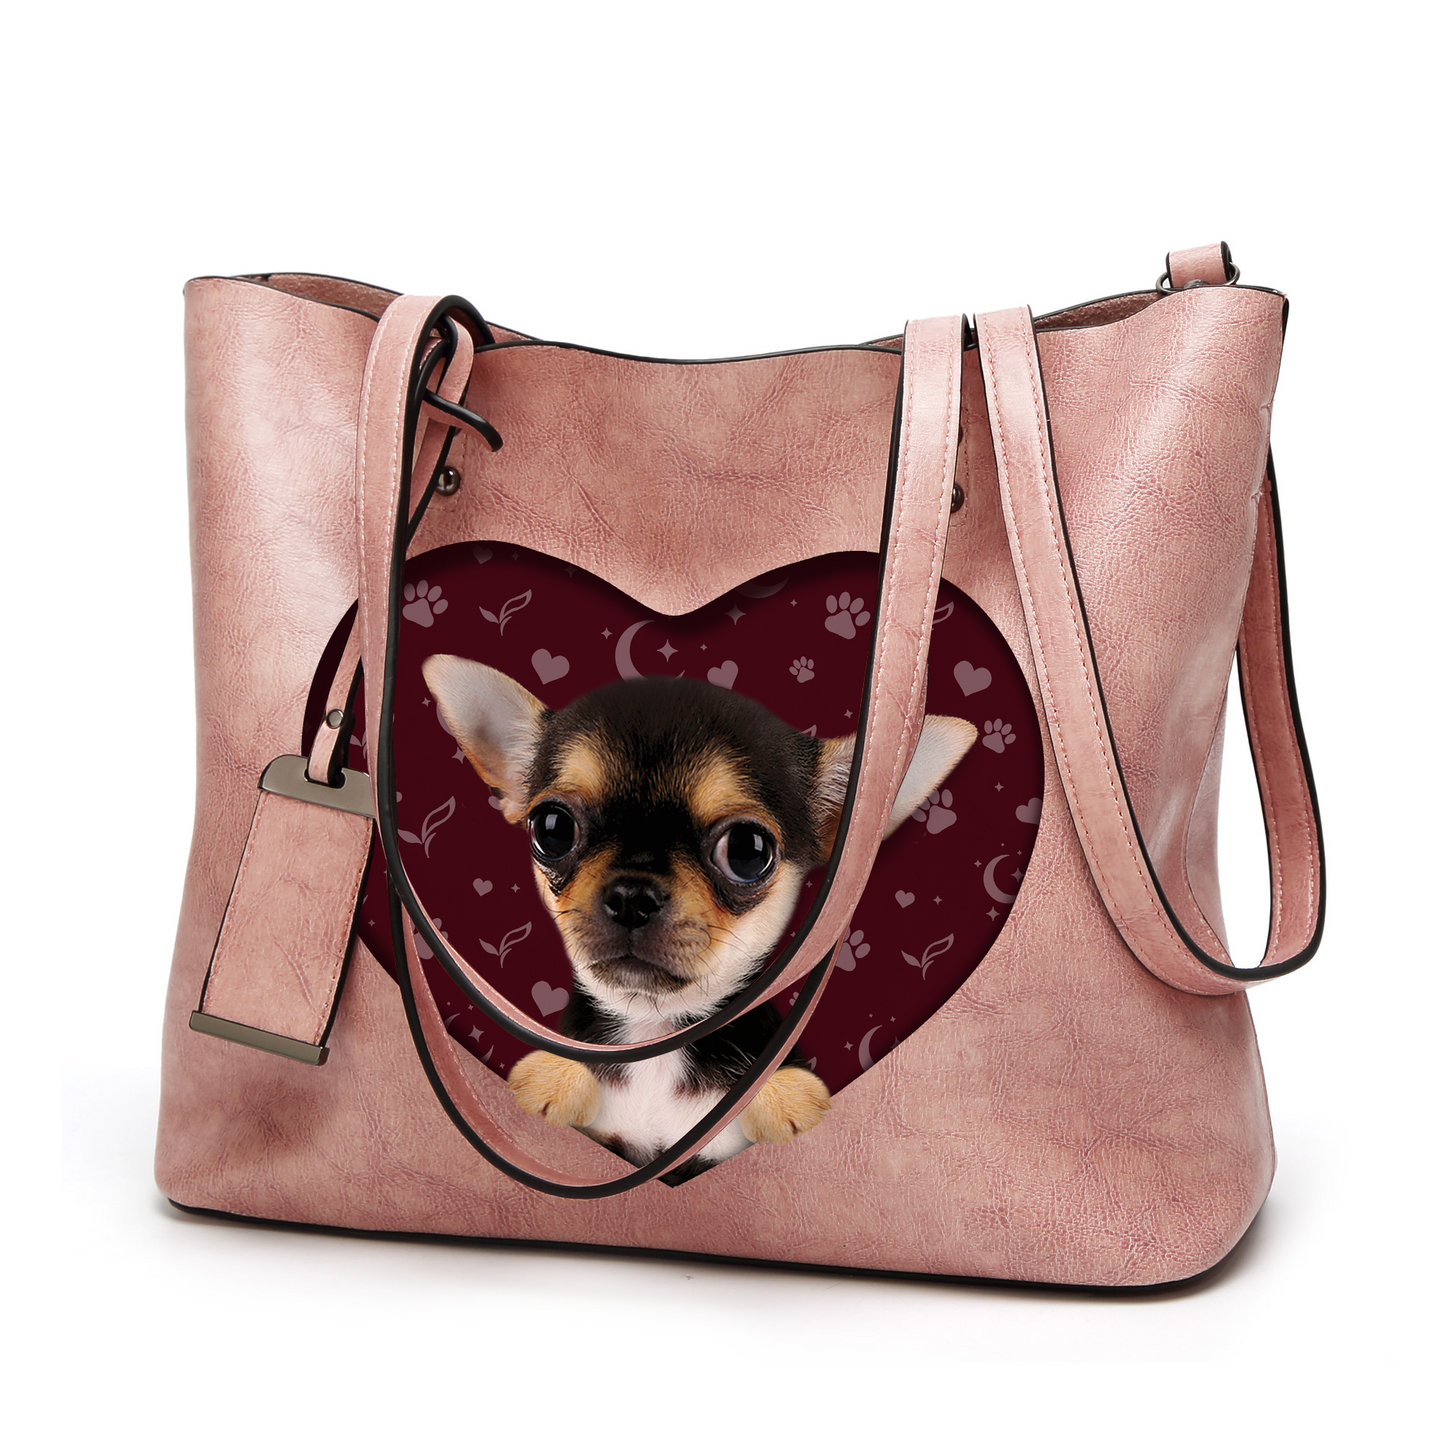 I Know I'm Cute - Chihuahua Glamour Handbag V5 - 7